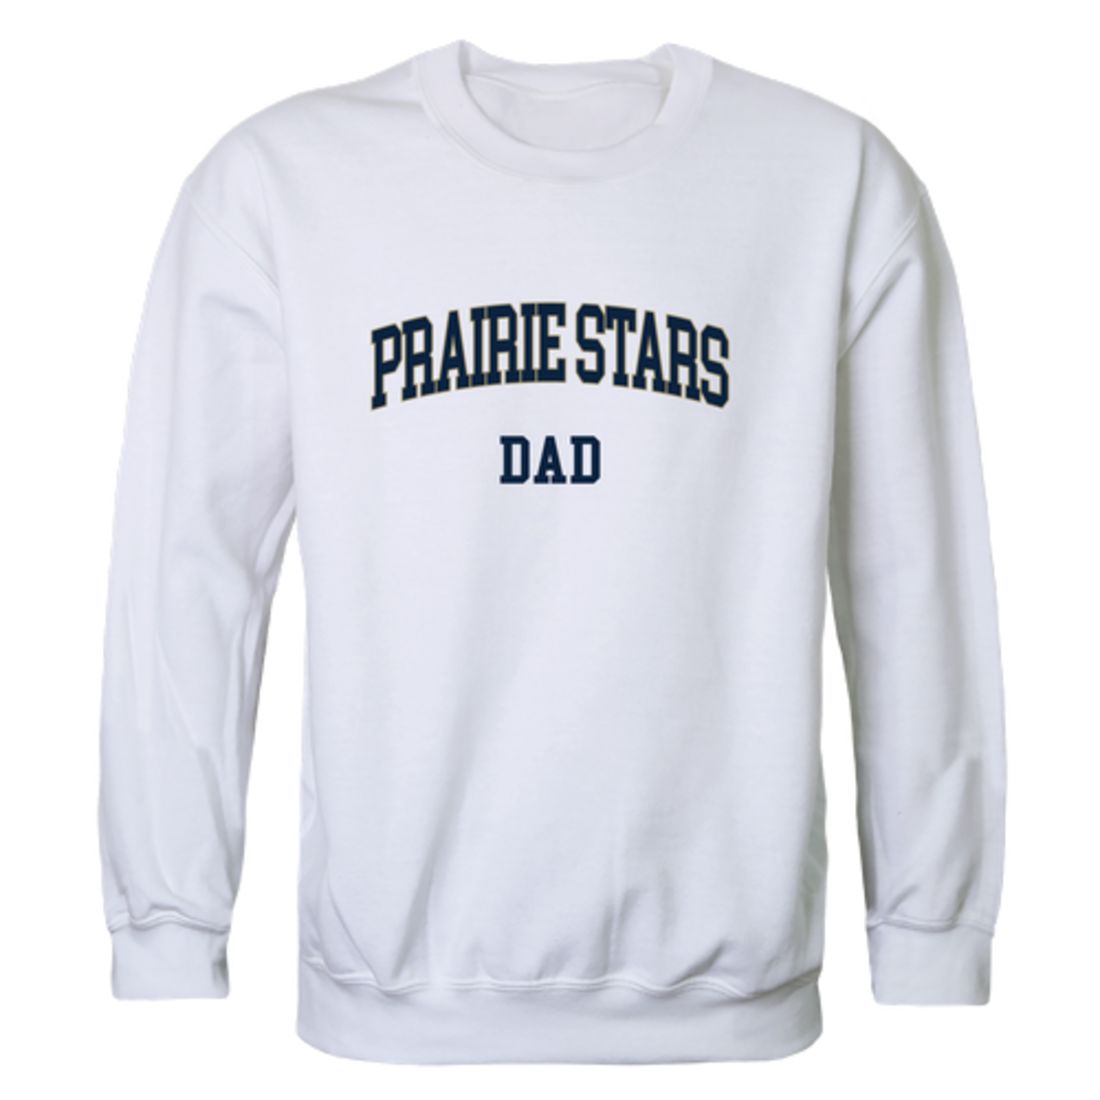 University of Illinois Springfield Prairie Stars Dad Fleece Crewneck Pullover Sweatshirt